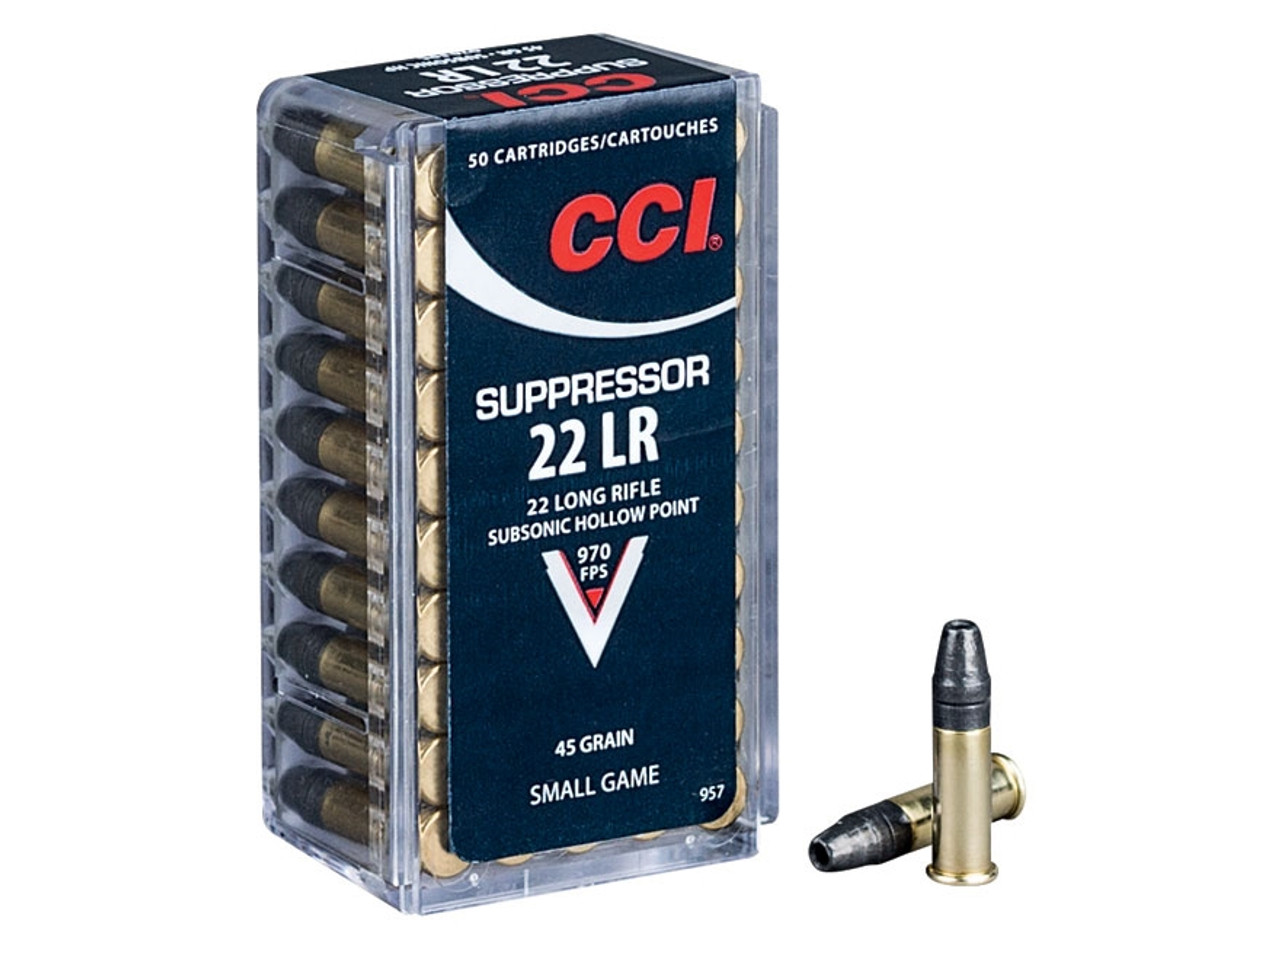 CCI "Suppressor" 22LR, 45gr Lead Hollow Point, Box of 50